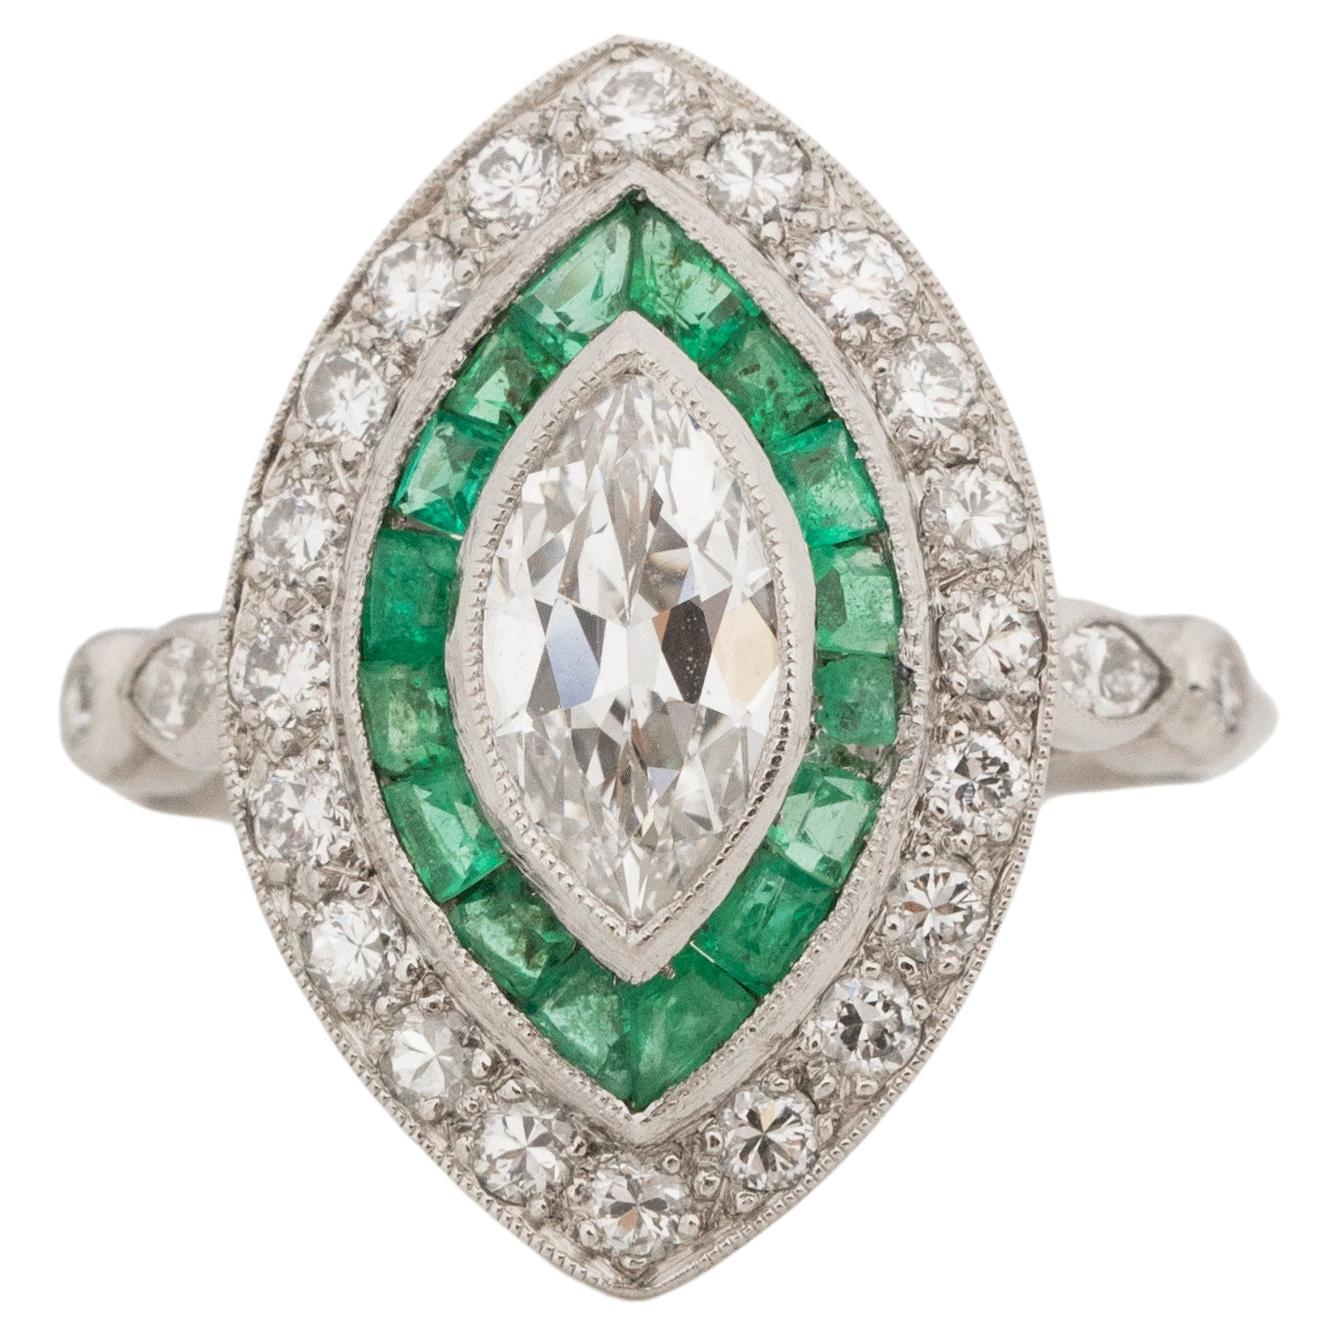 .90 Carat Total Weight Art Deco Diamond Emerald Platinum Engagement Ring